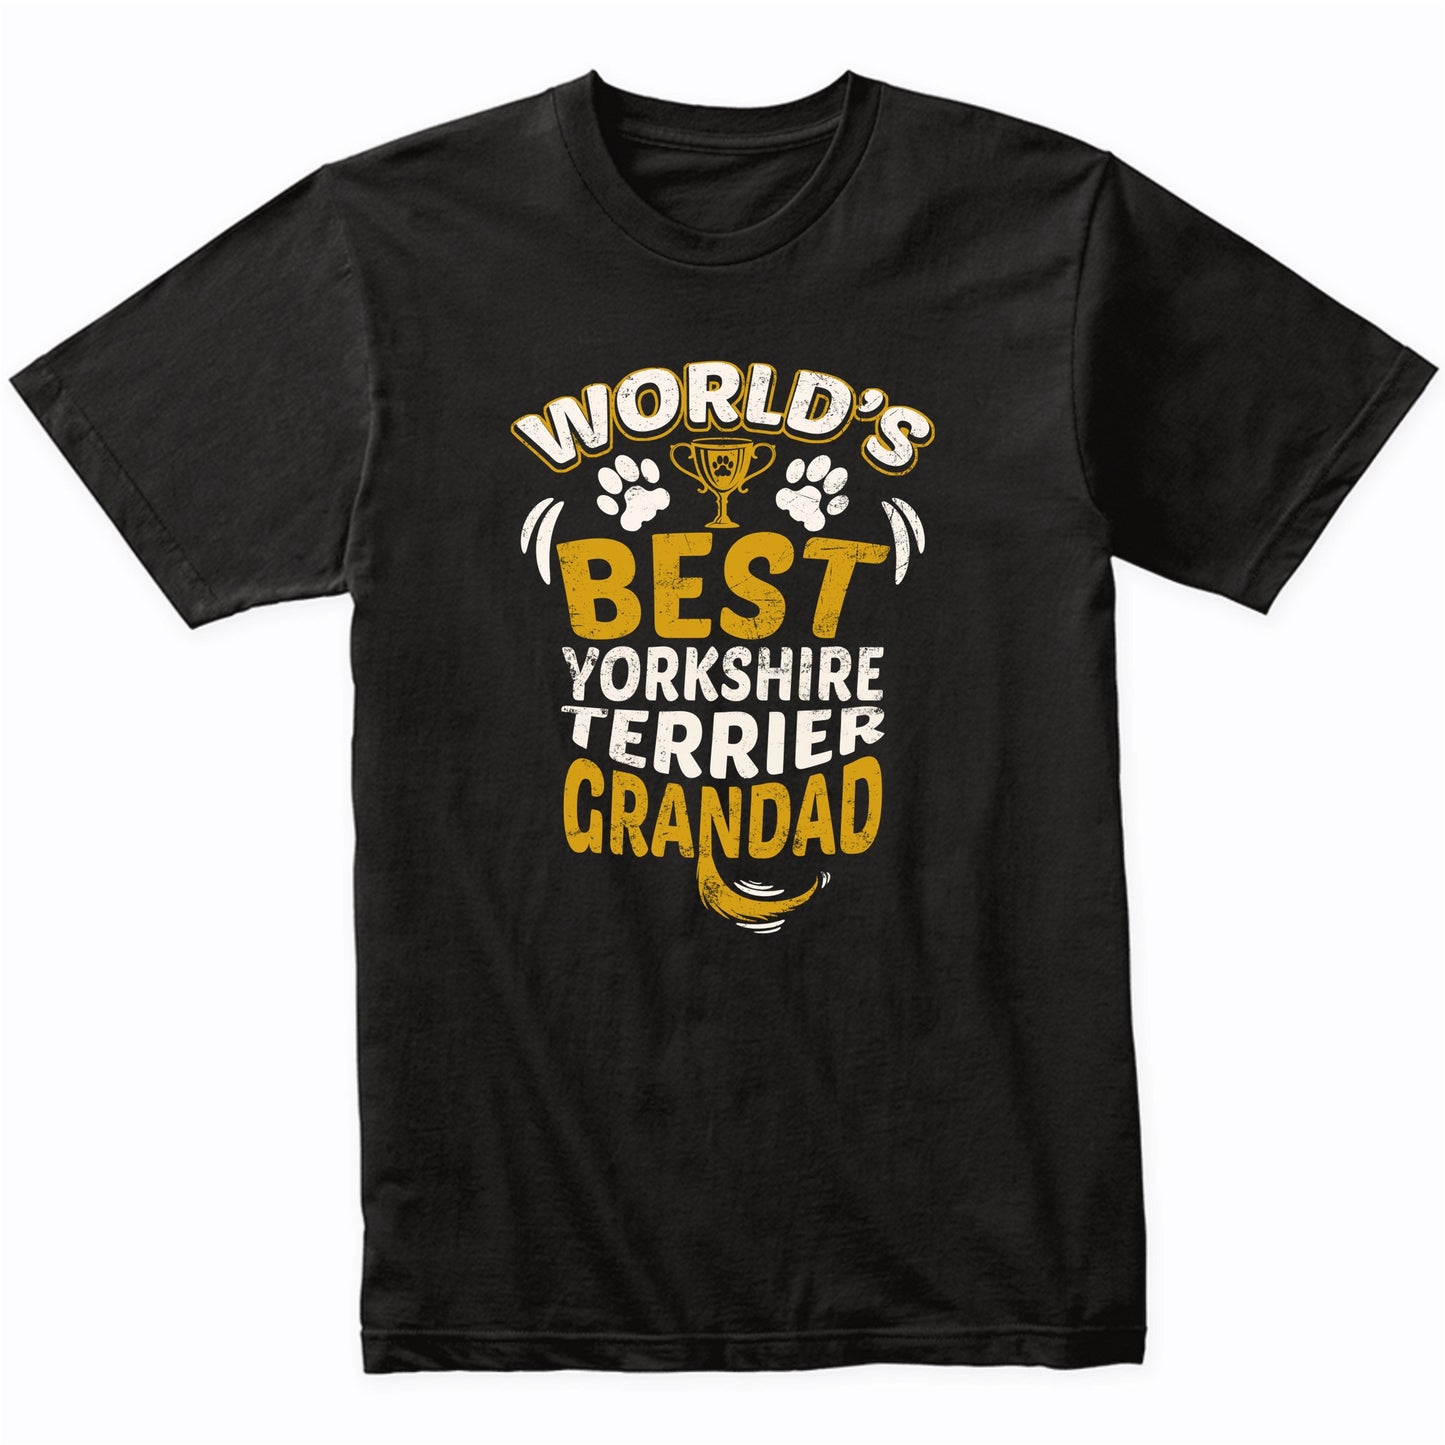 World's Best Yorkshire Terrier Grandad Graphic T-Shirt